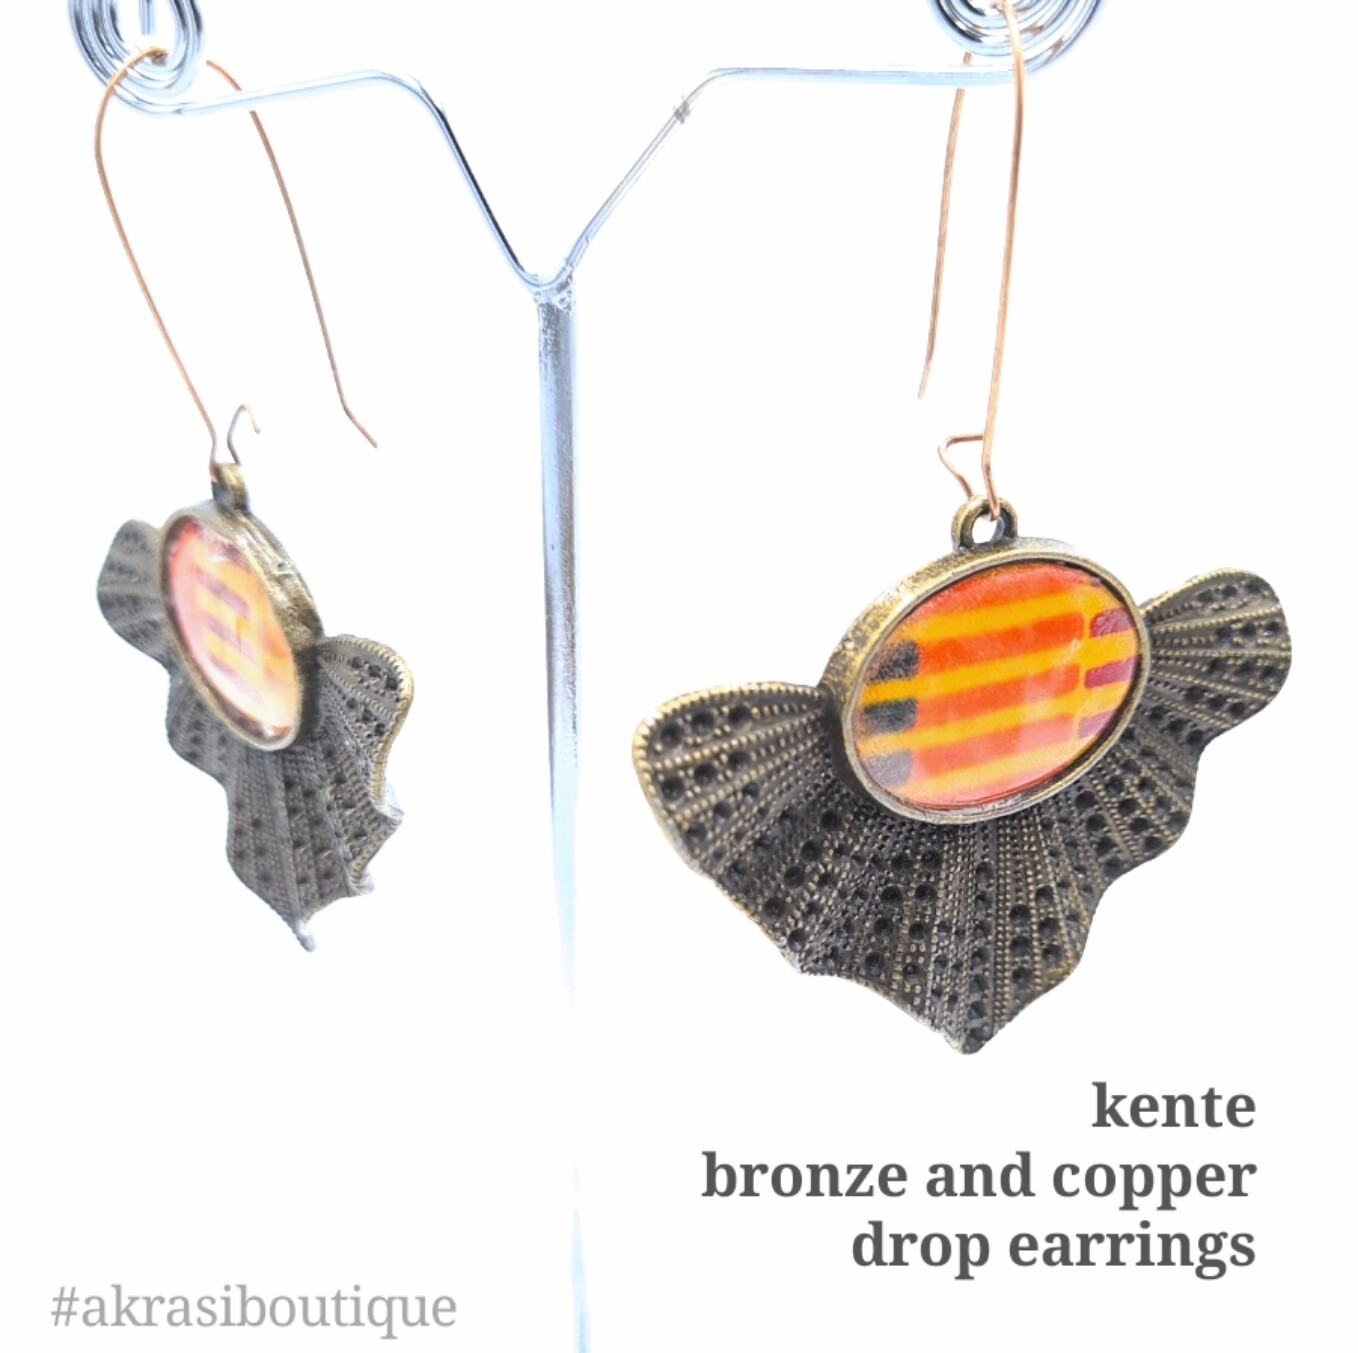 Kente collection bronze & copper drop earrings